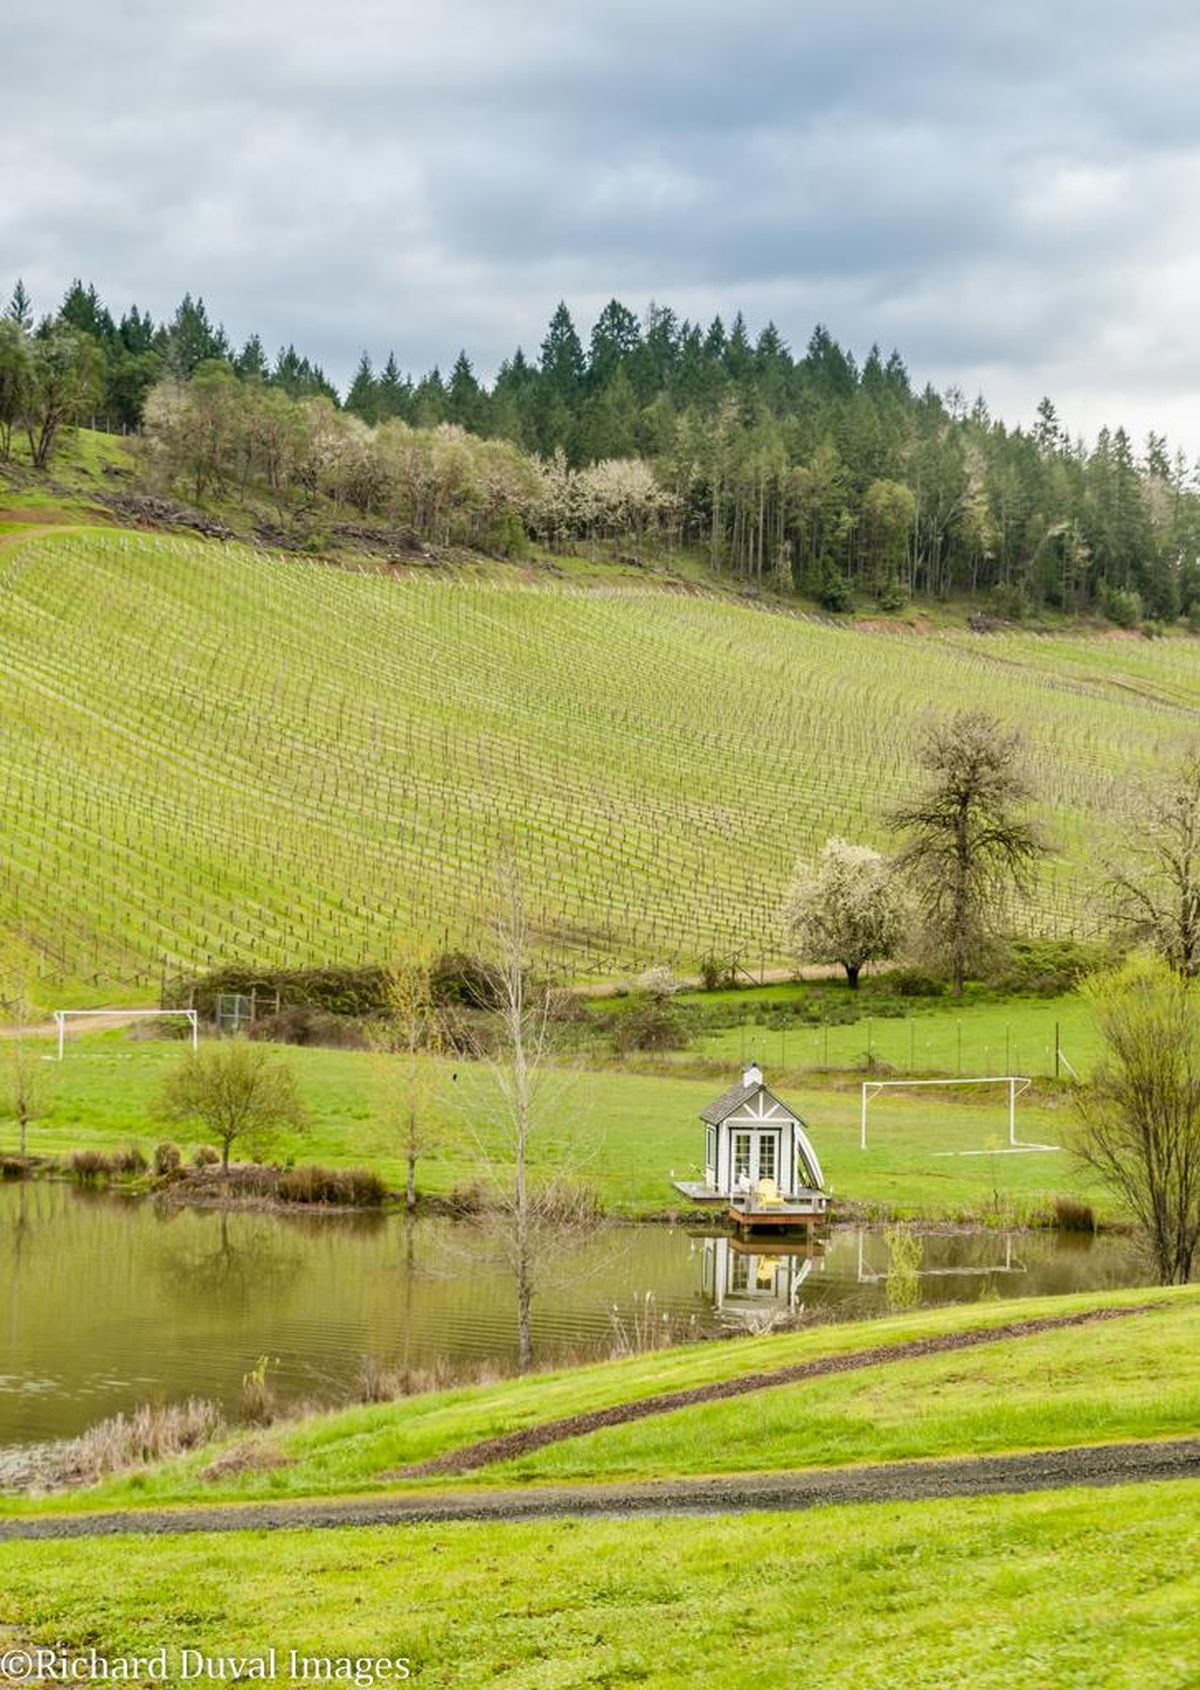 The Reustle family began planting Romancing Rock Vineyard in Oregon’s Umpqua Valley in 2002. (Richard Duval Images)